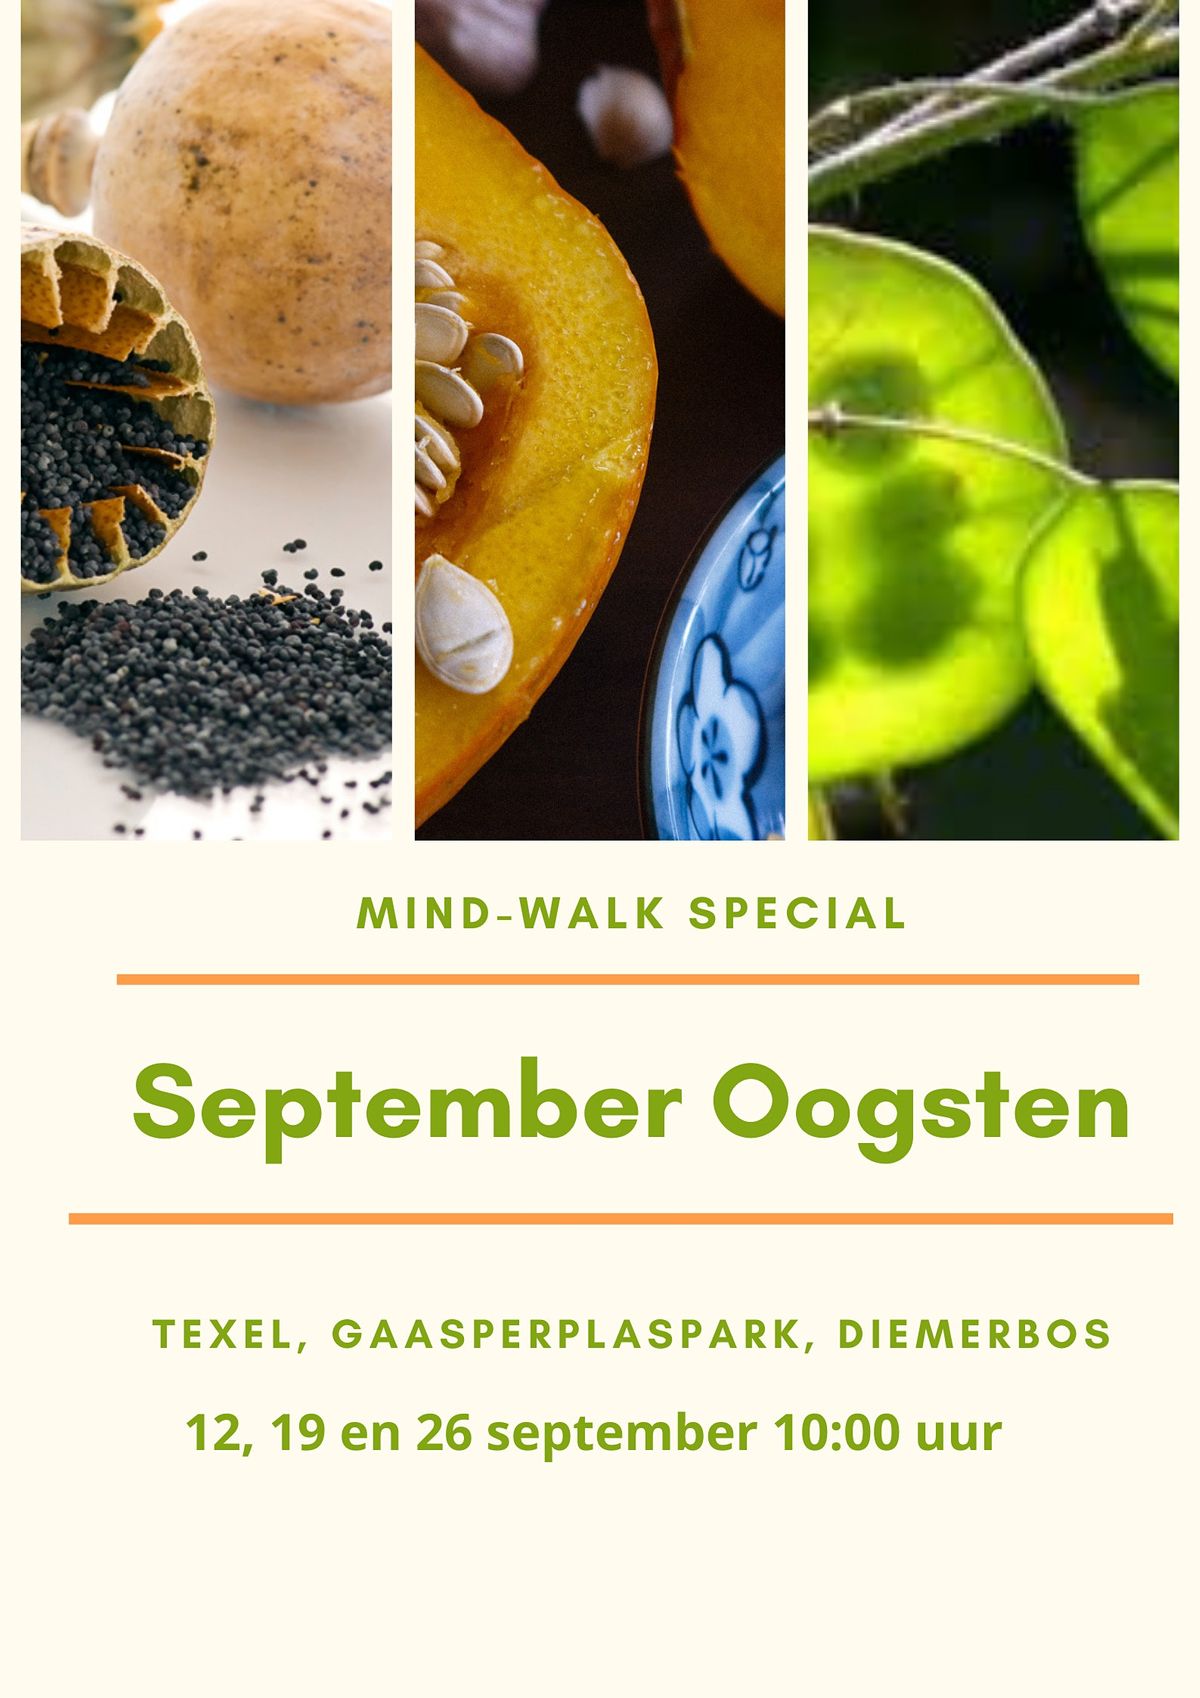 September Oogsten Mind-Walk Special